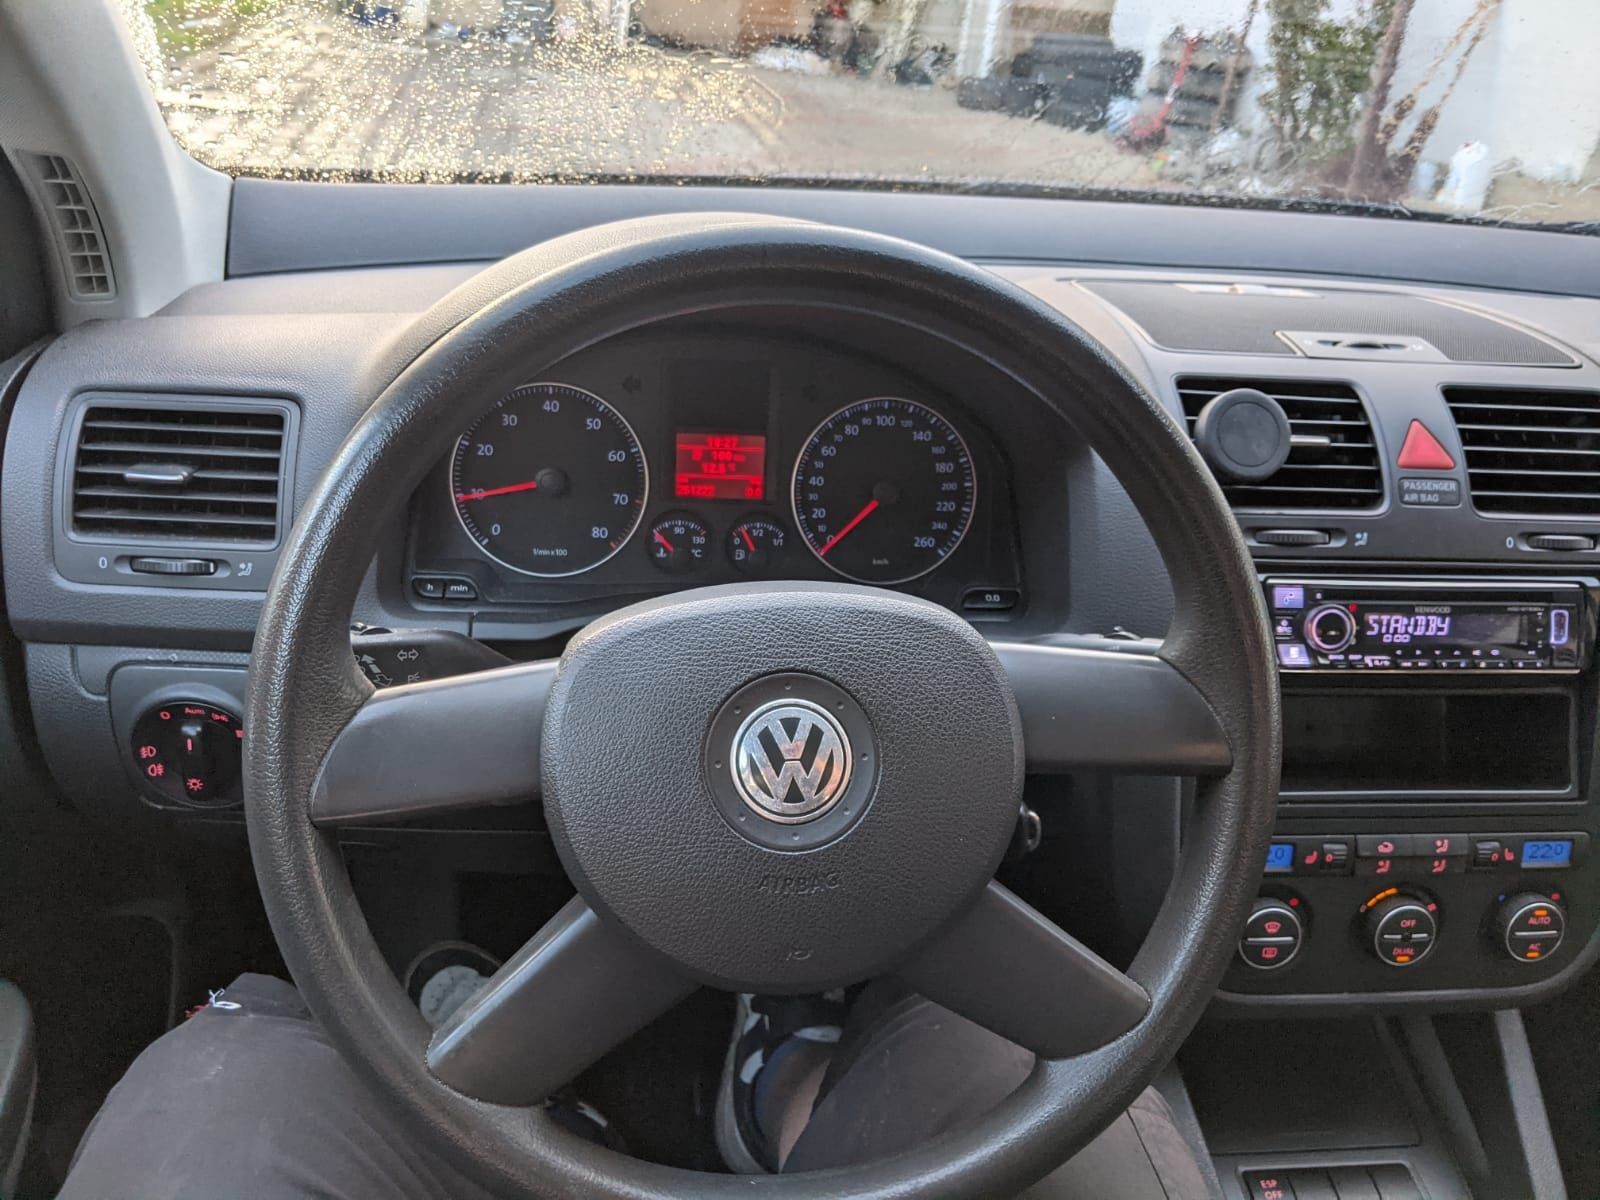 VW Golf 5 1.6 benzina 2008 EDITION